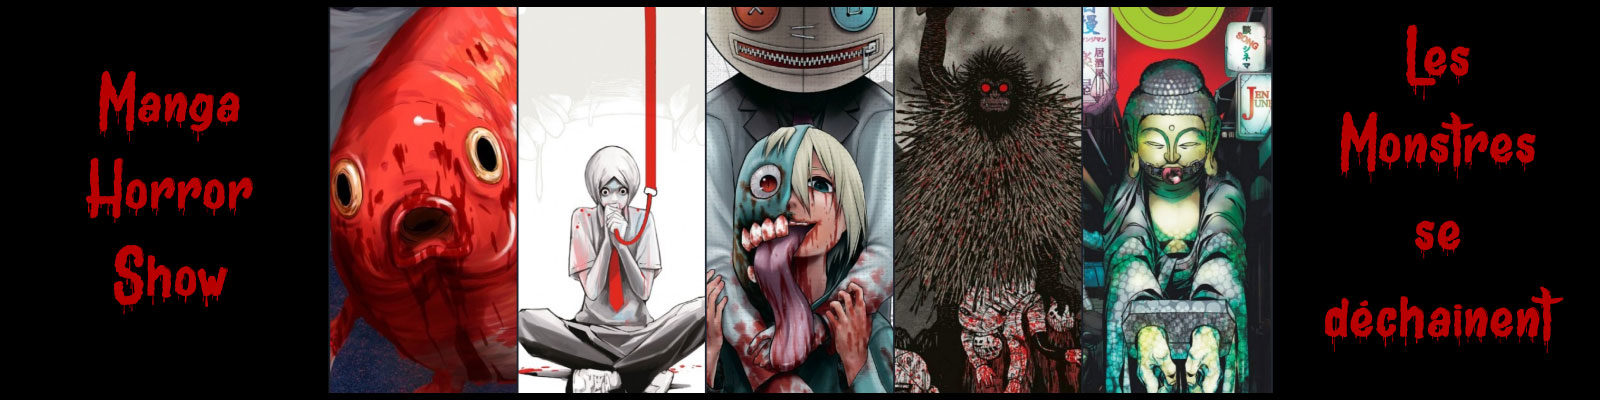 Manga Horror Show-Monstres